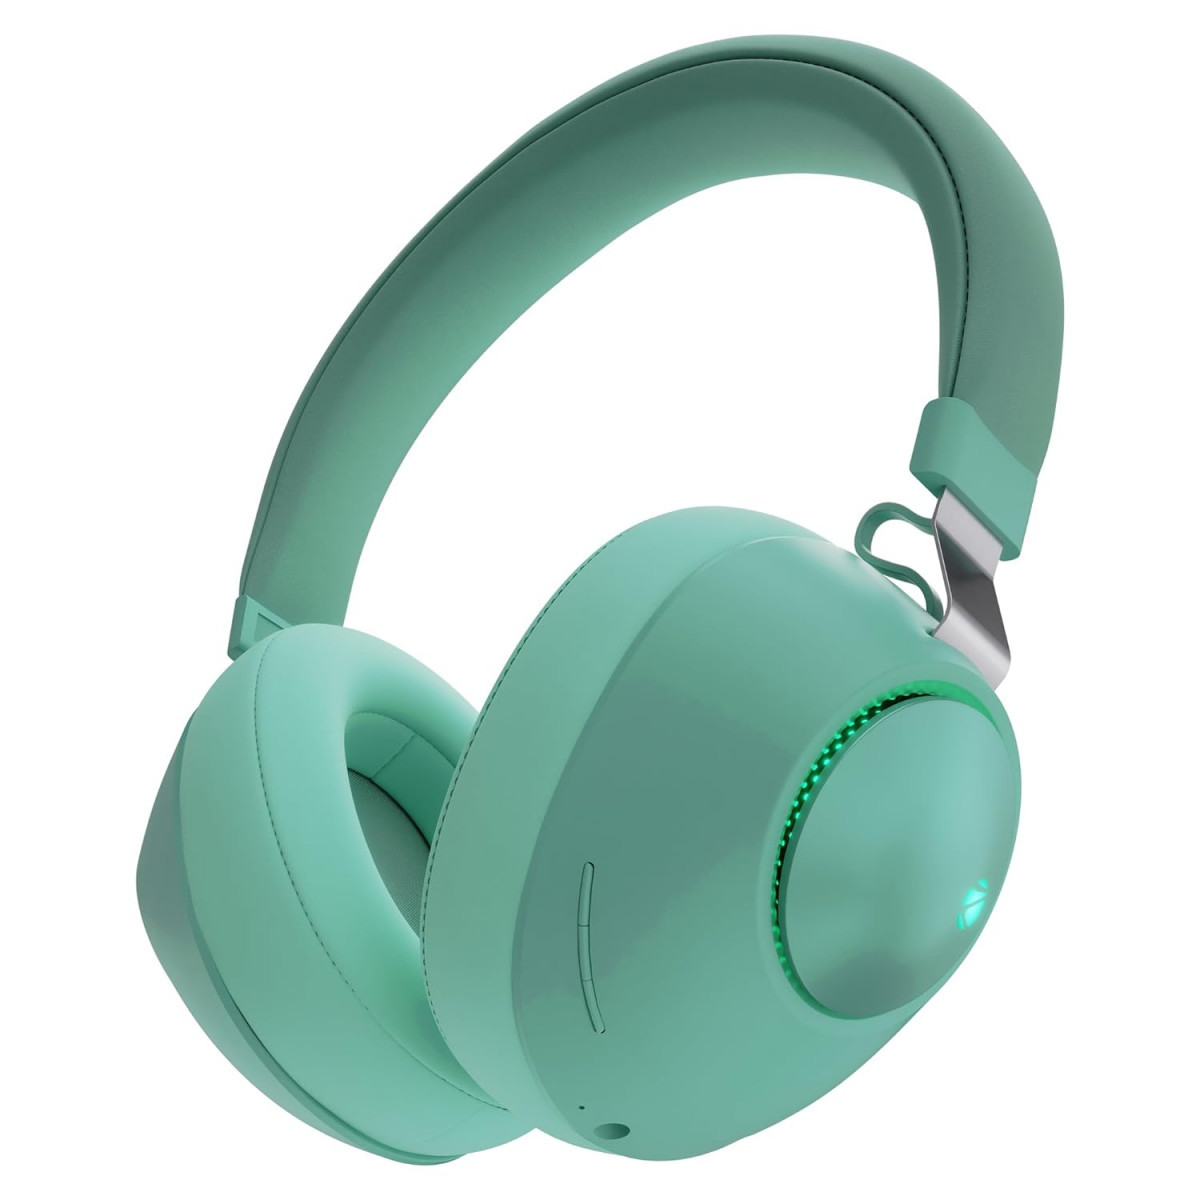 ZEBRONICS Duke 60hrs Playback Bluetooth Wireless Over Ear Headphone with Mic Green